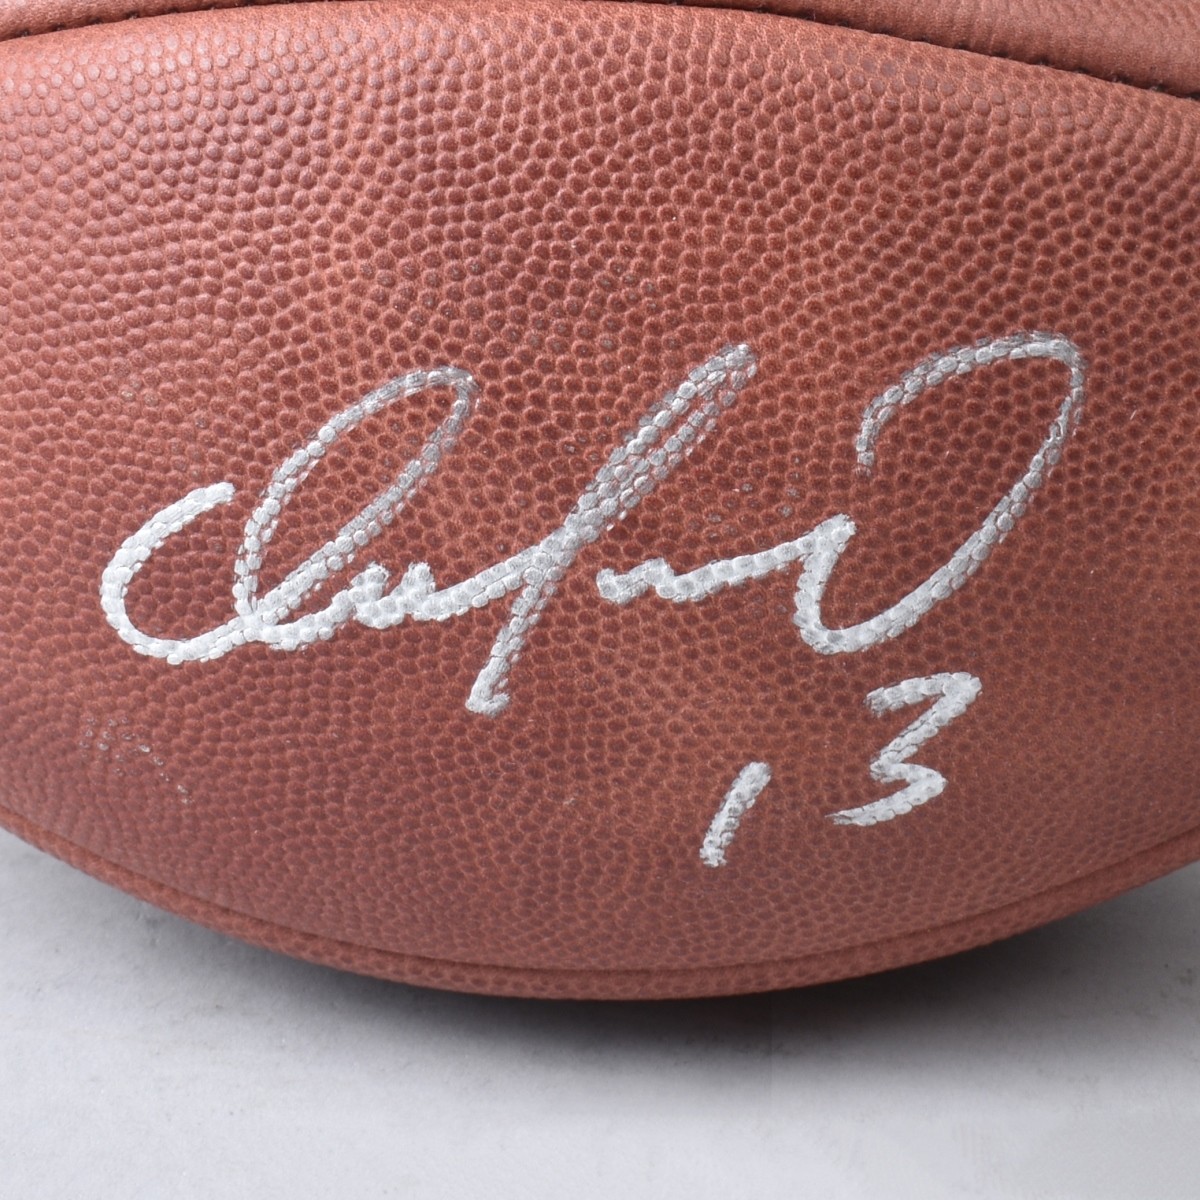 NFL Authentic Football signed Dan Marino